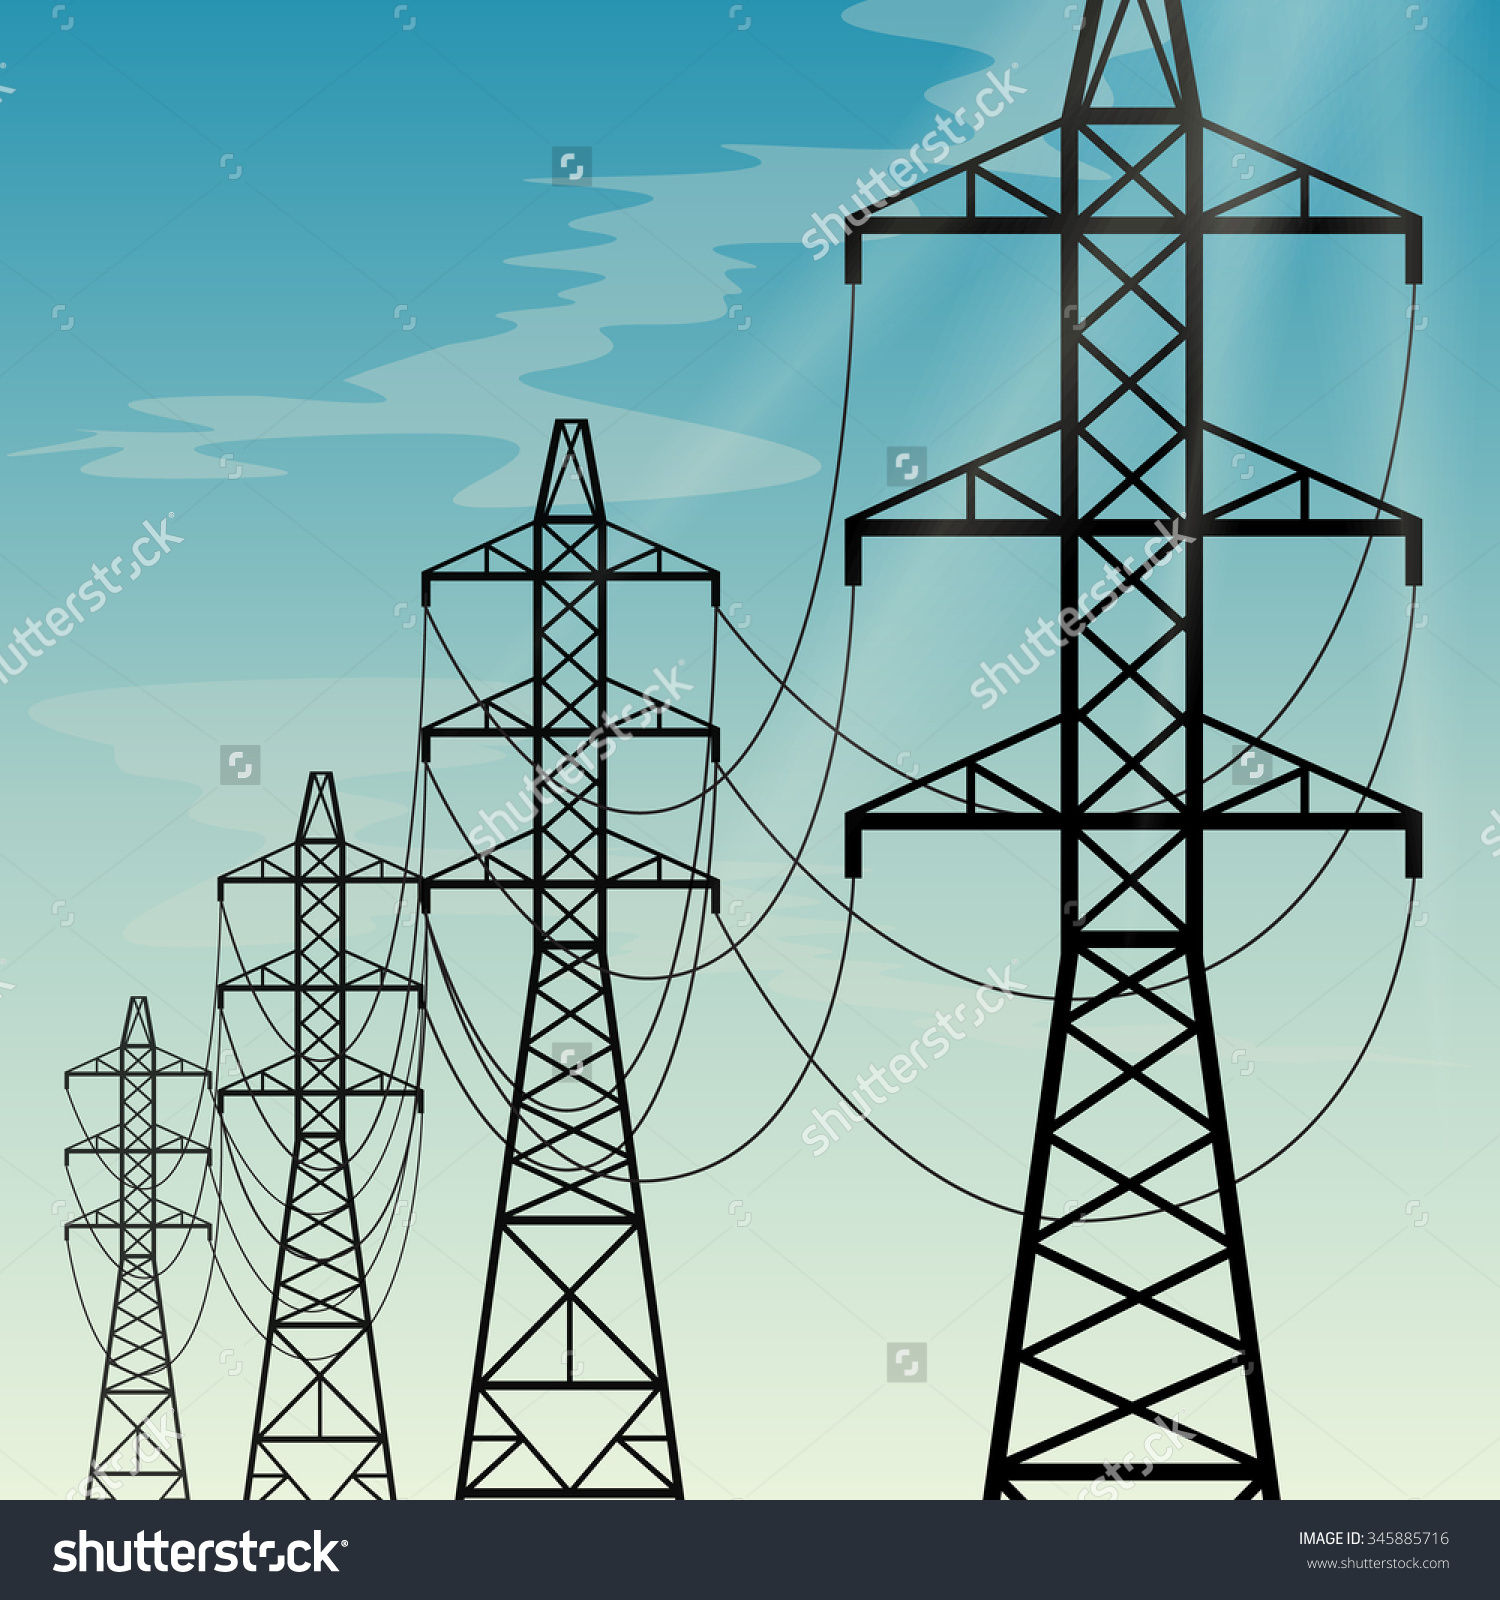 High Voltage Overhead Power Lines Stock Vector 345885716.